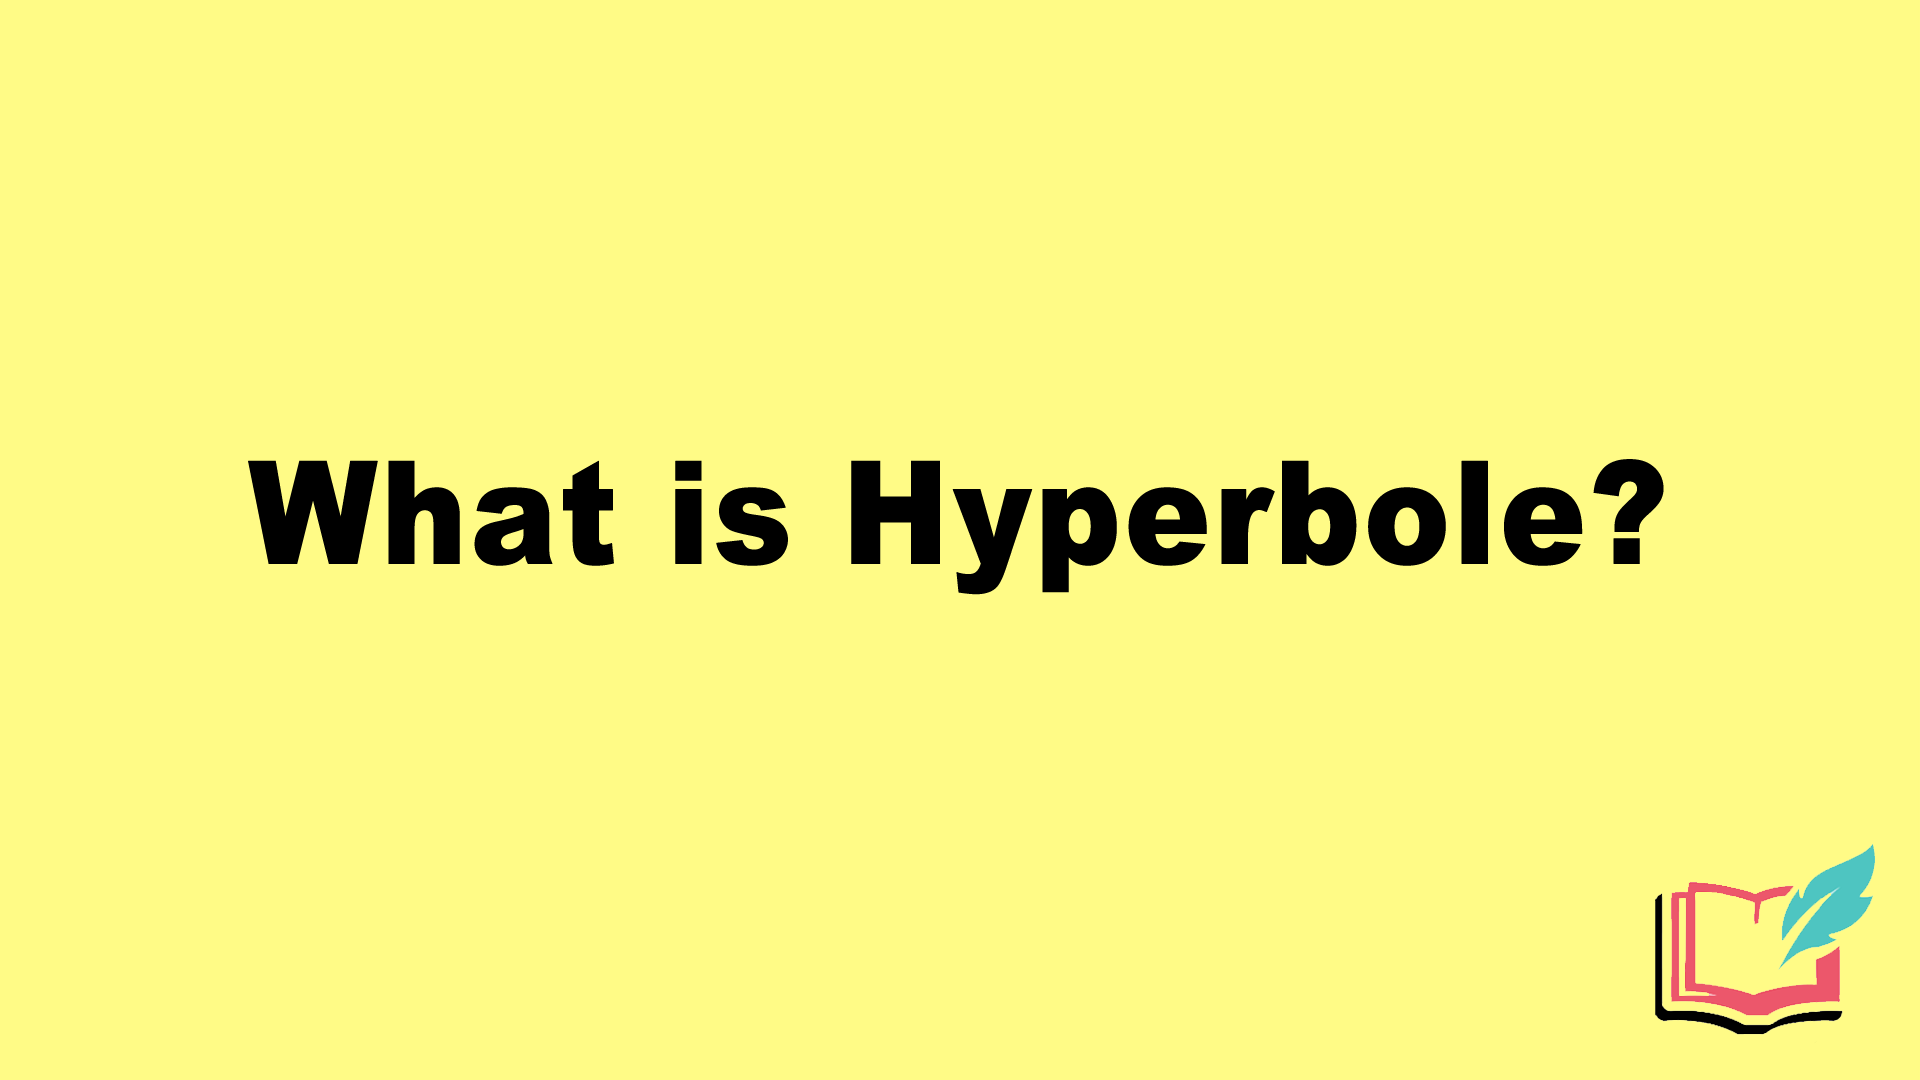 hyperbole definition